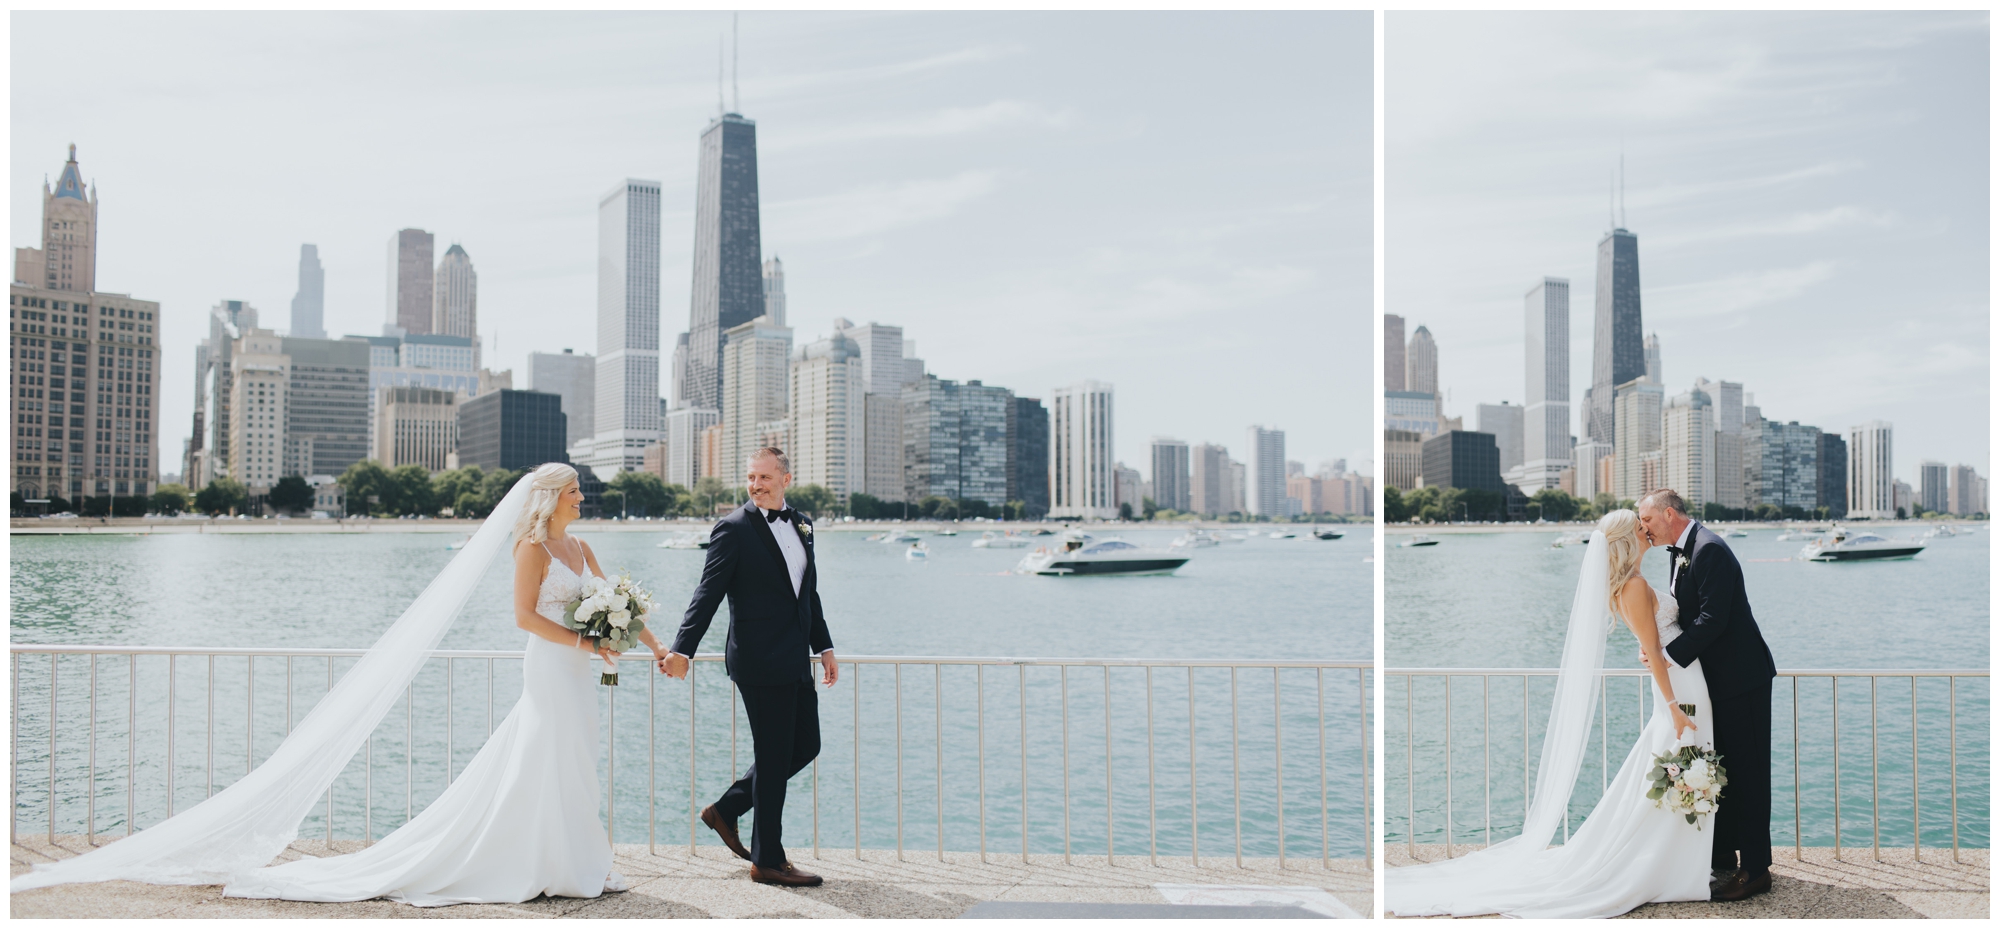 River Walk Chicago wedding pictures by Meg Adamik Creative